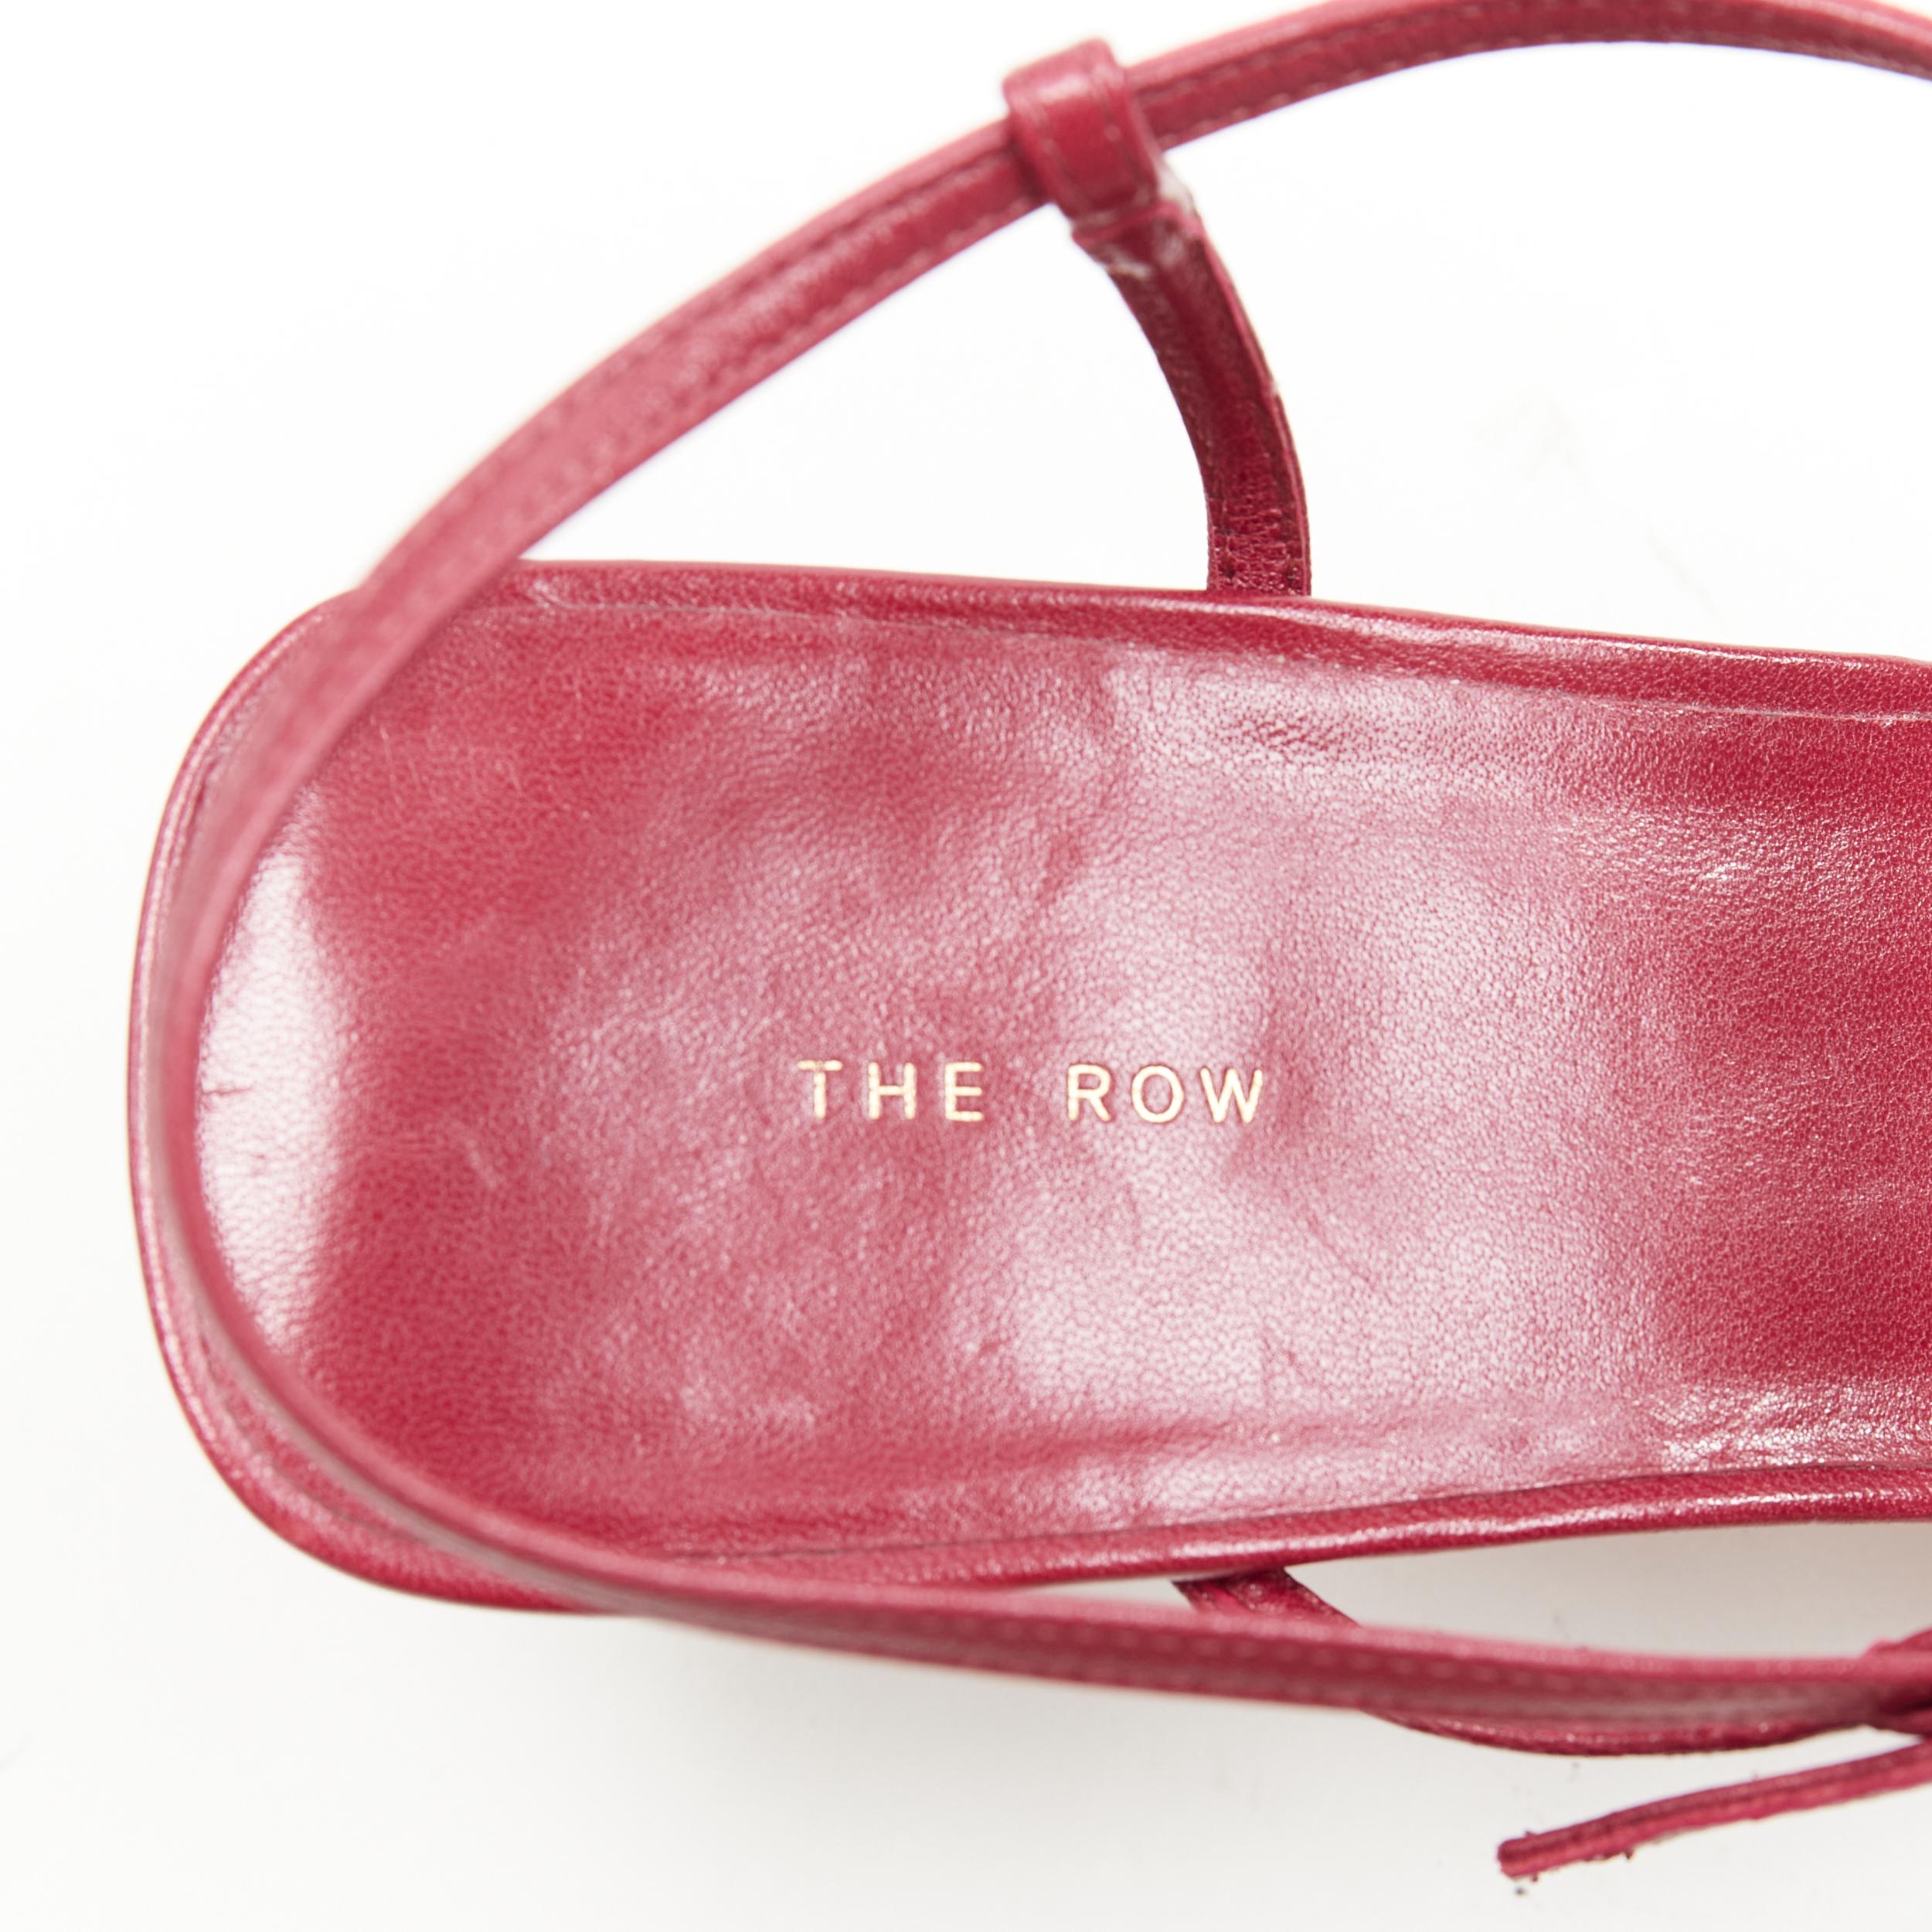 Women's new THE ROW Bare 65 burgundy red minimalist sling mid heel sandals EU36.5